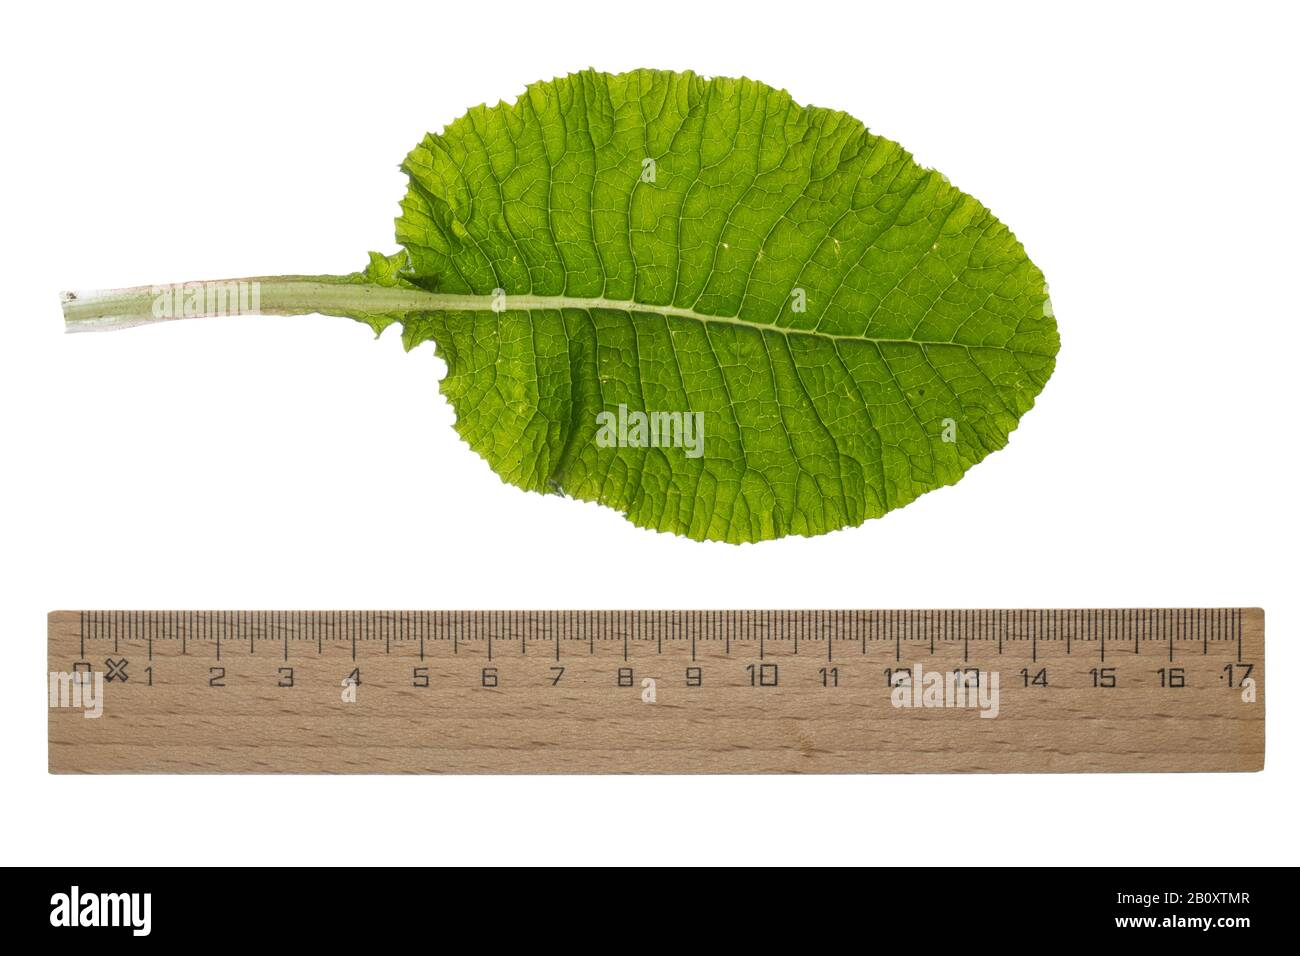 True oxlip (Primula elatior), leaf, cutout with ruler, Germany Stock Photo